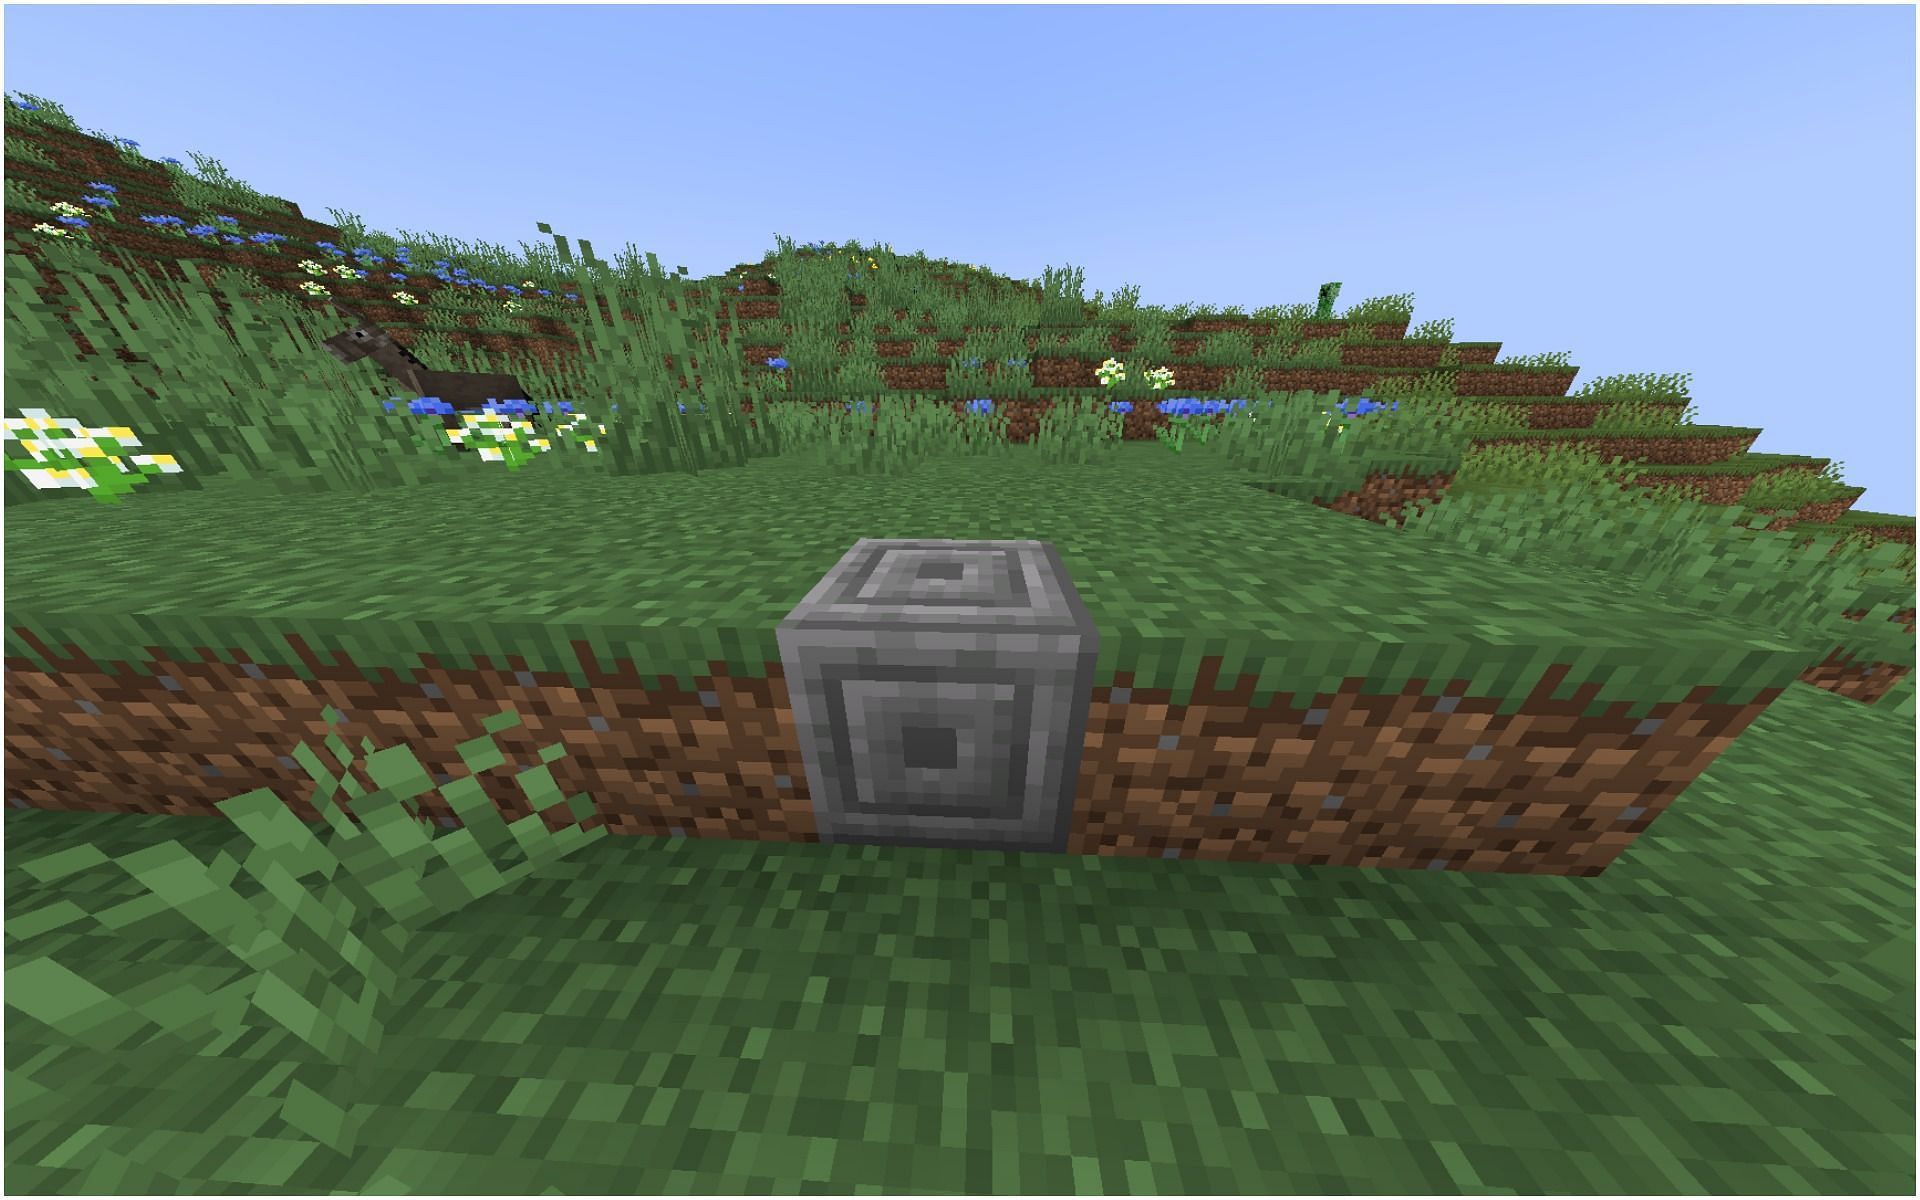 Stone Bricks (chiseled): Minecraft Pocket Edition: CanTeach